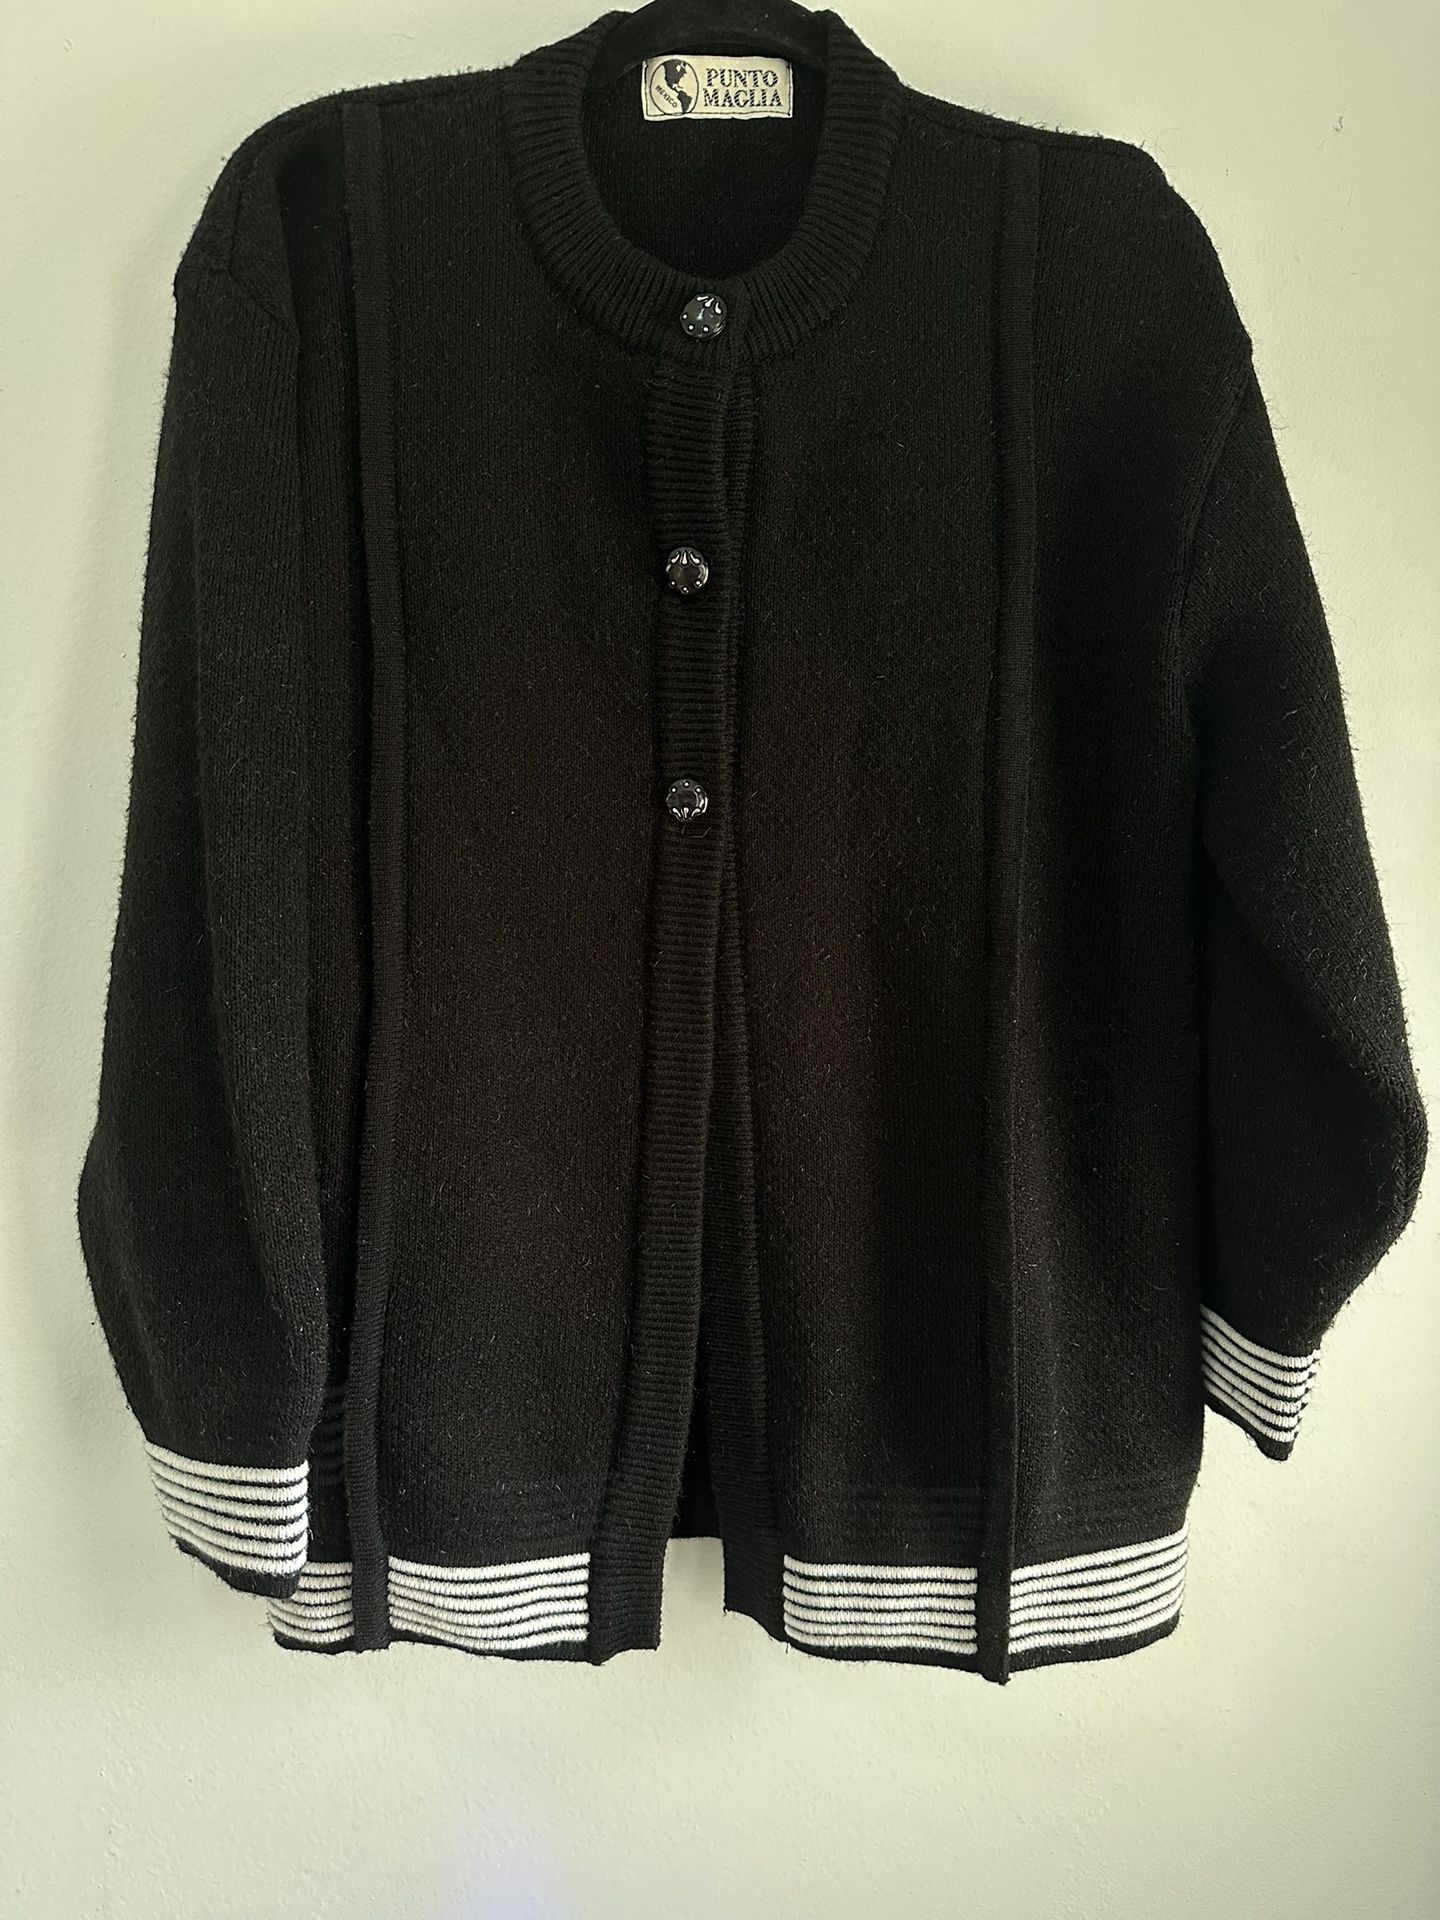 Vintage Cardigan Sweater Black White Stripes Womens Warm 3 button Front Size L